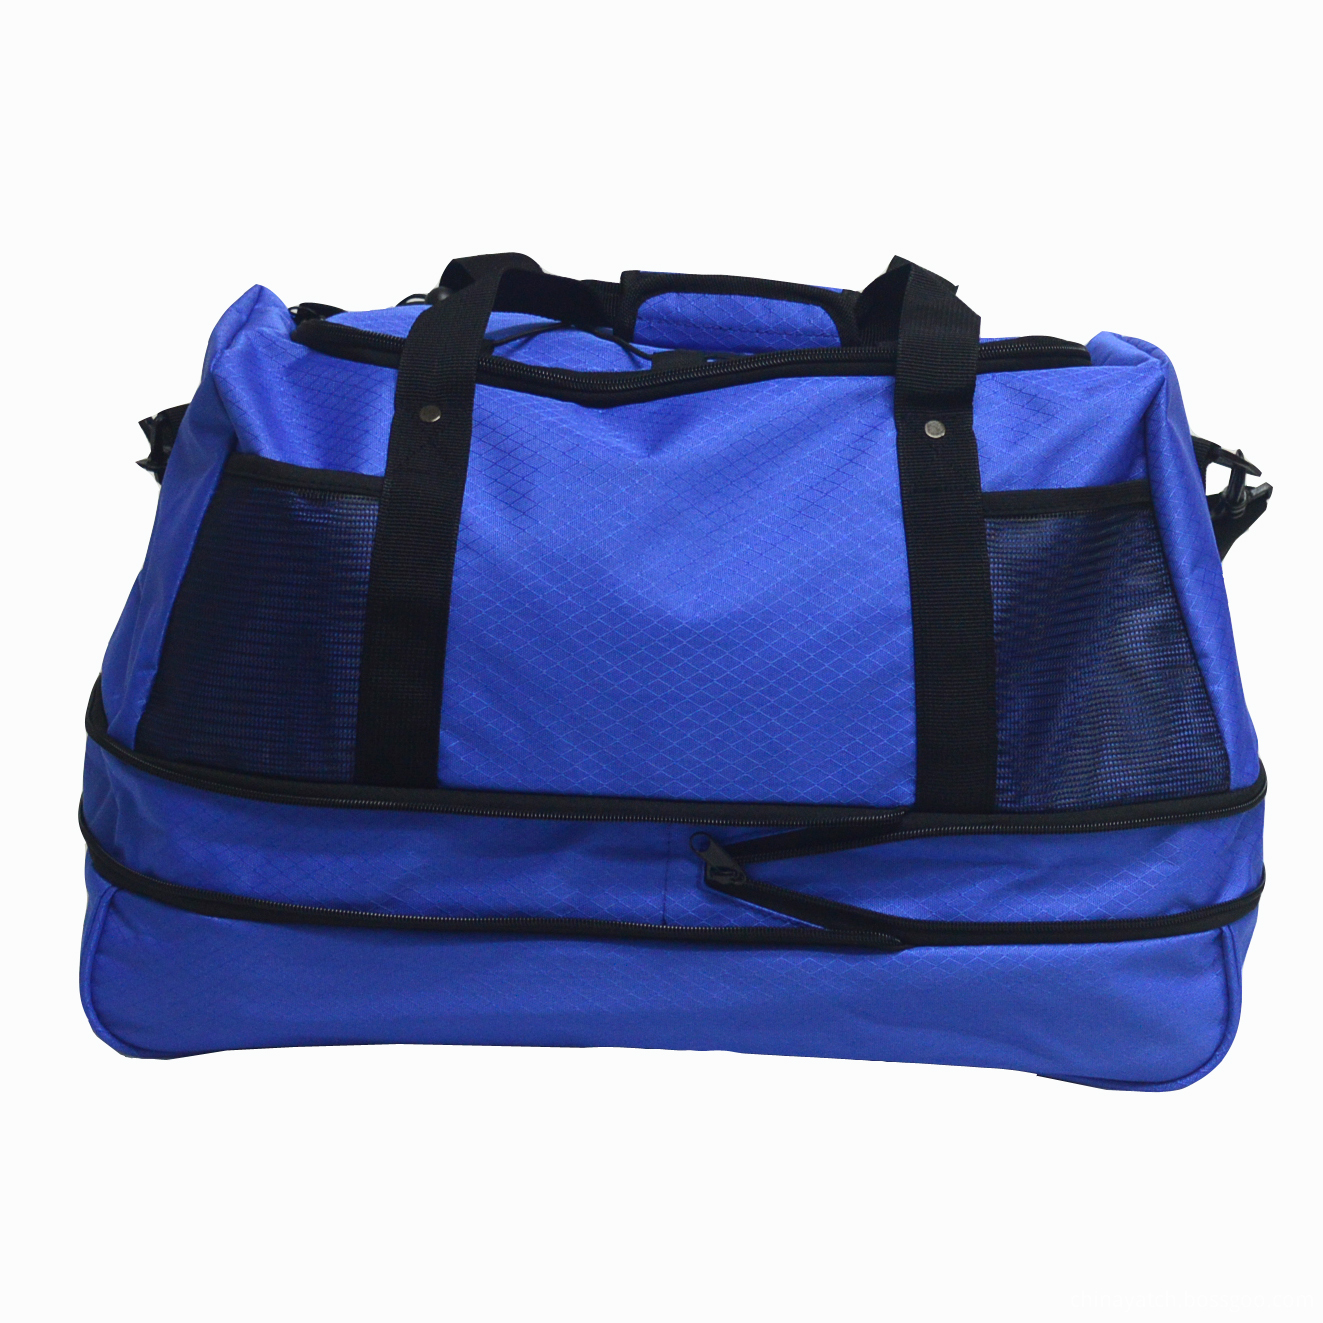 Dual-use backpack & bag